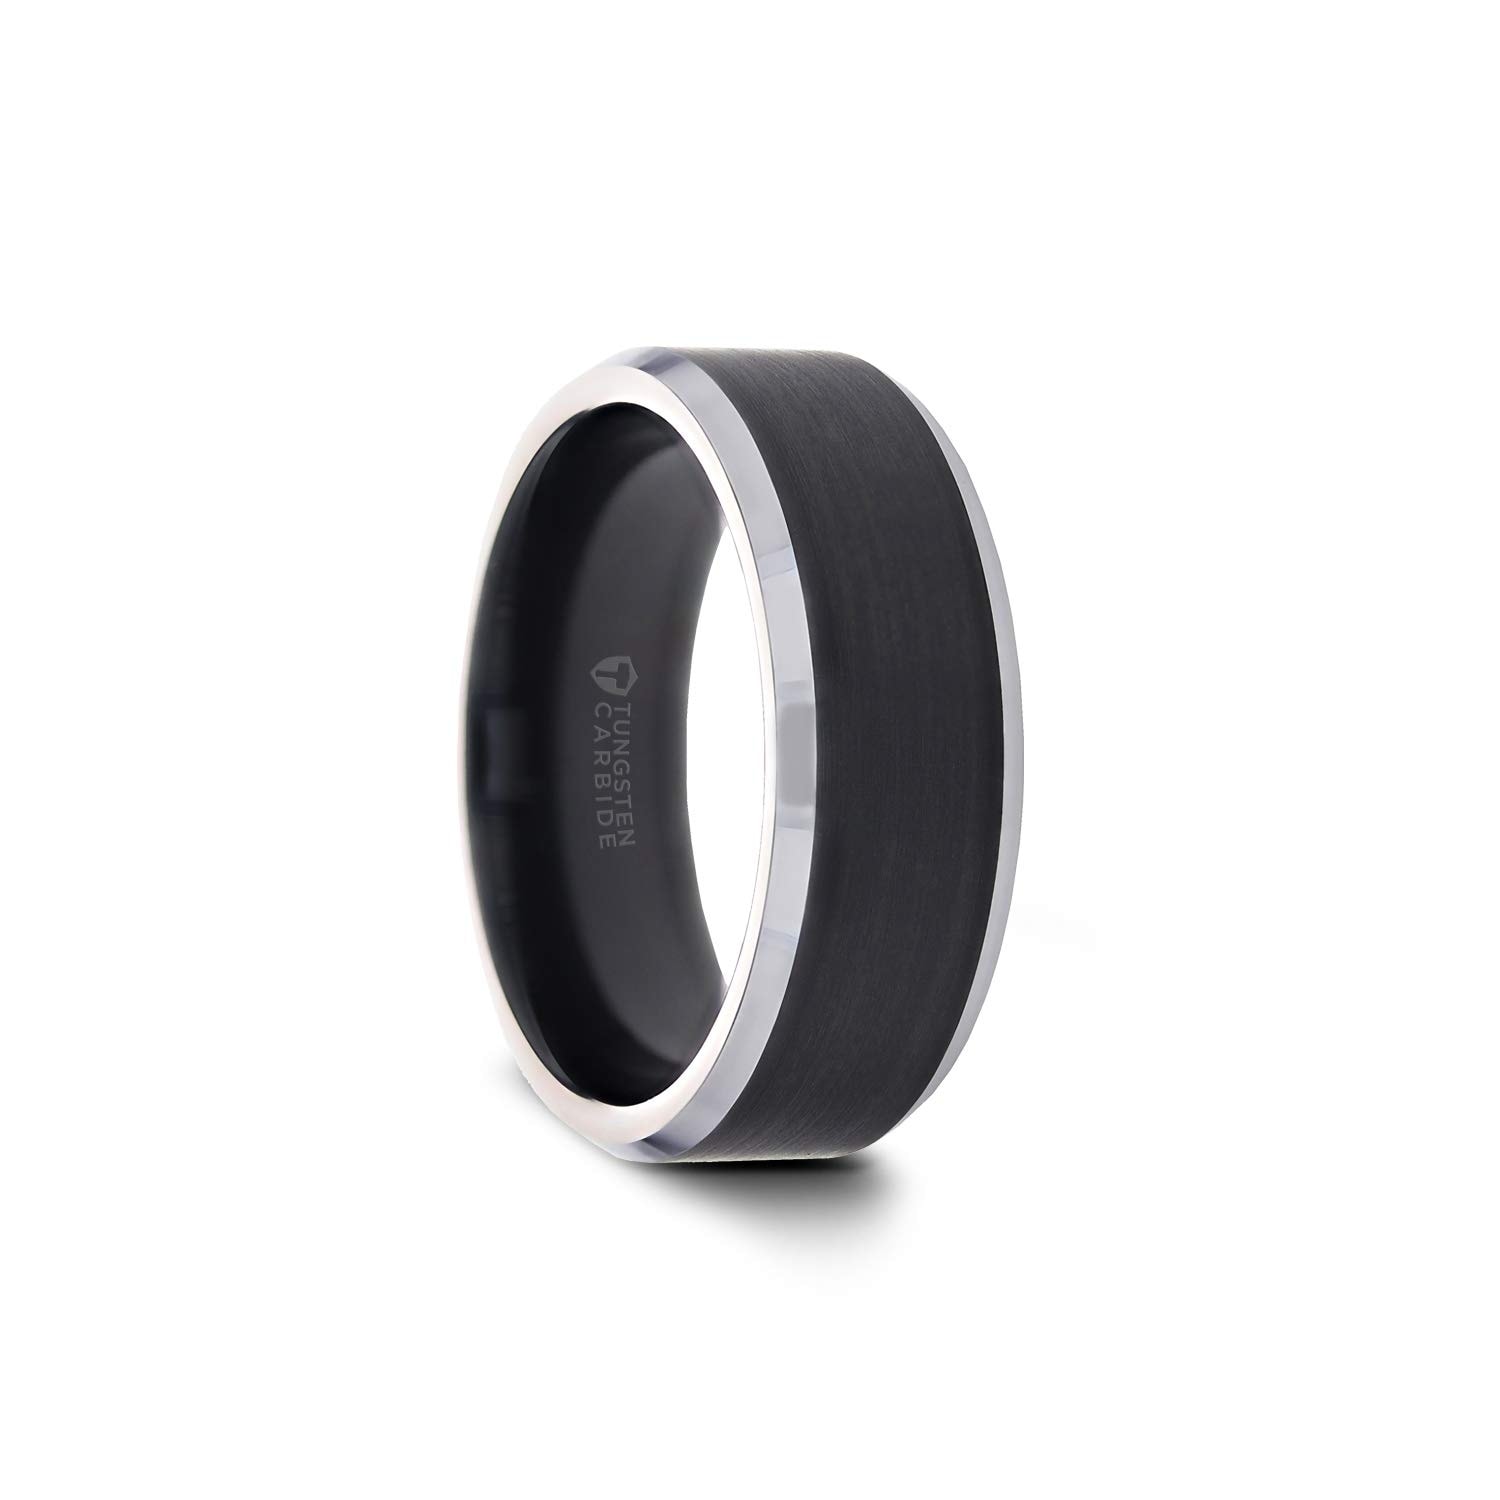 10mm Men/'s or Ladie/'s Tungsten Carbide Black Brushed Center Wedding Band Ring